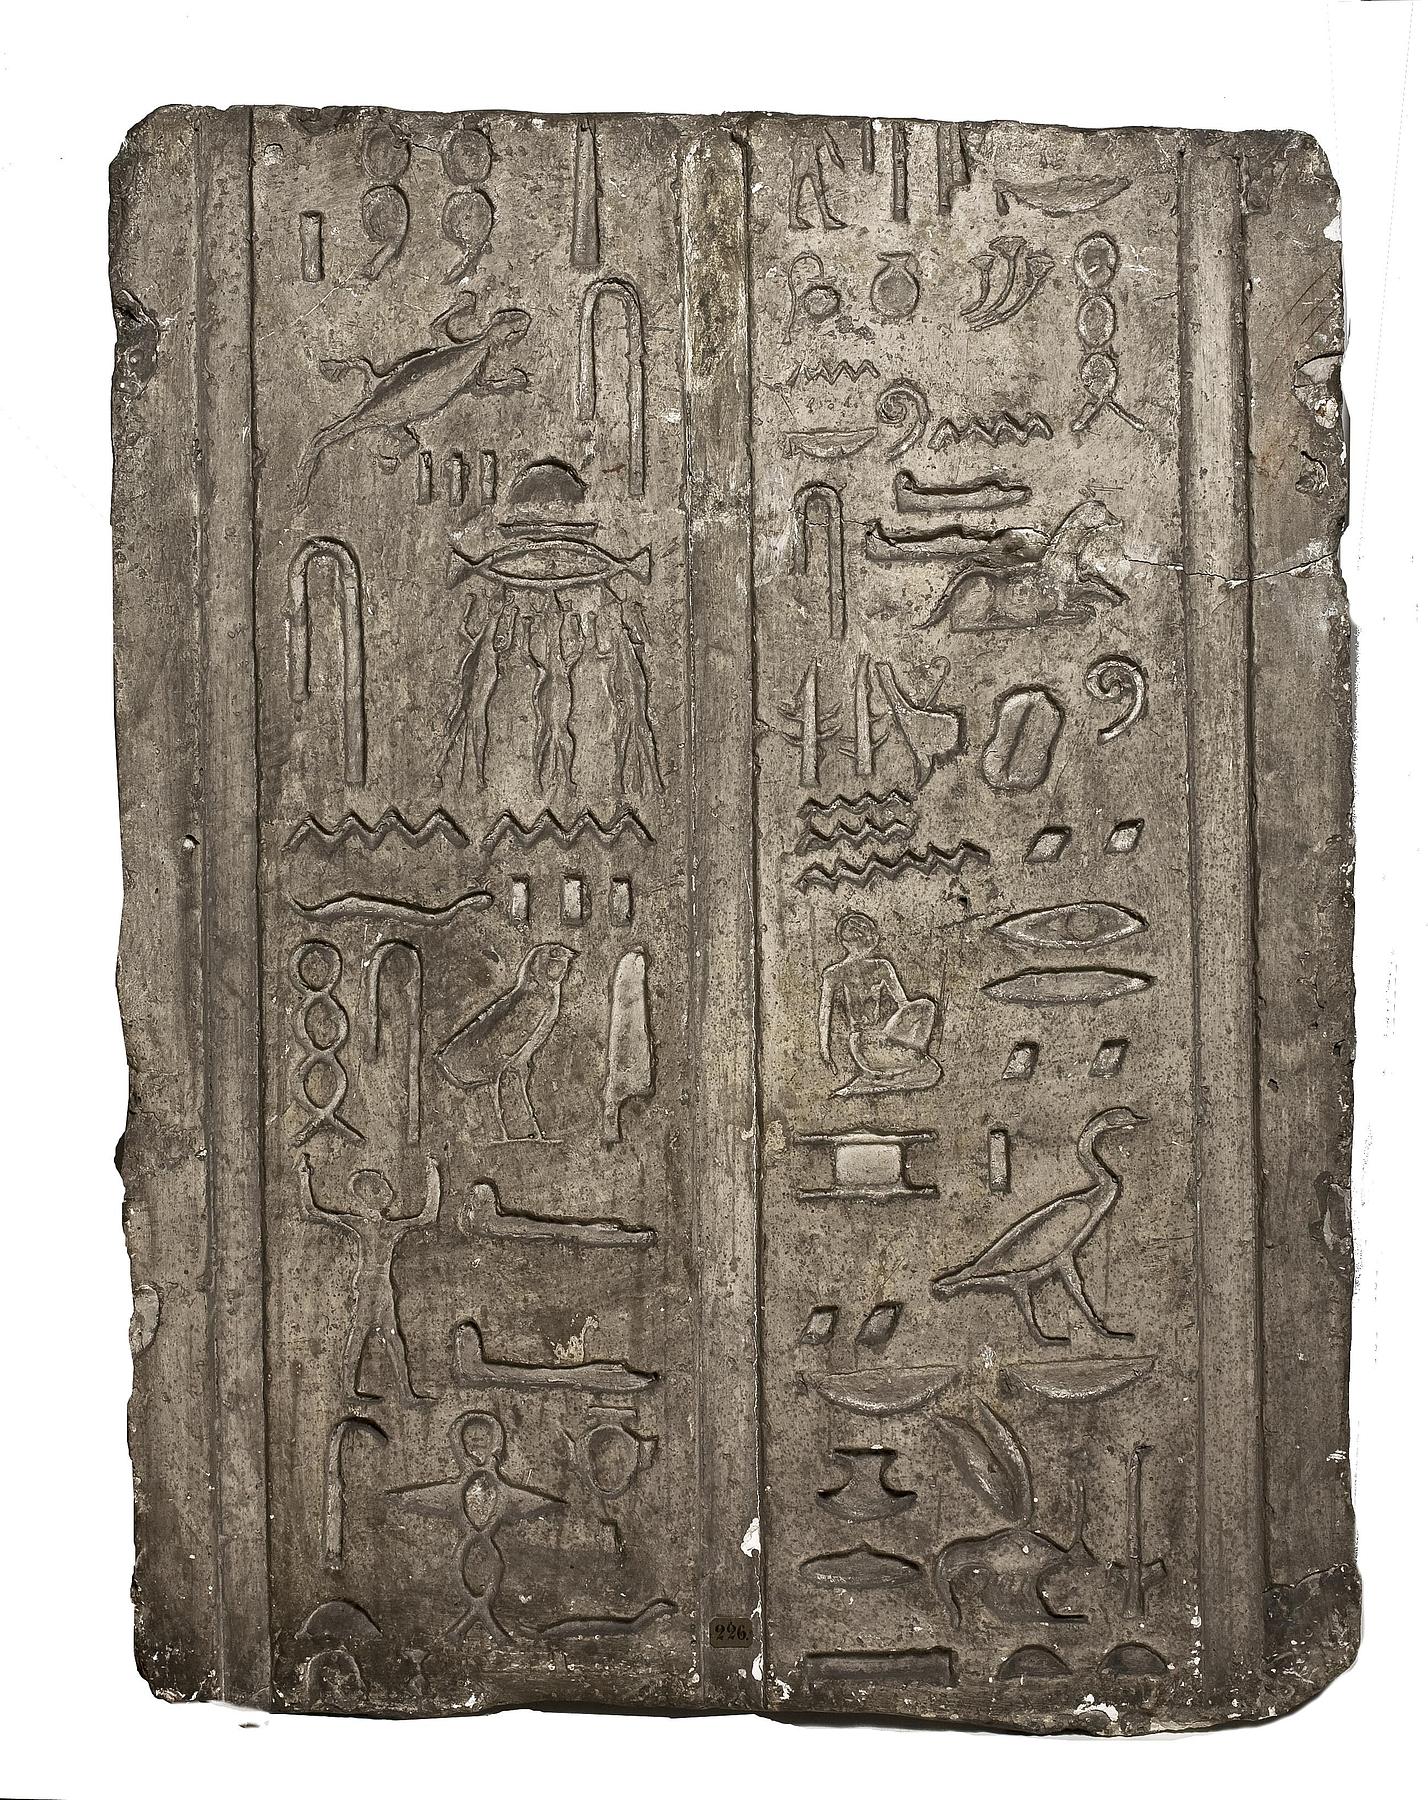 Hieroglyphic inscription, L226